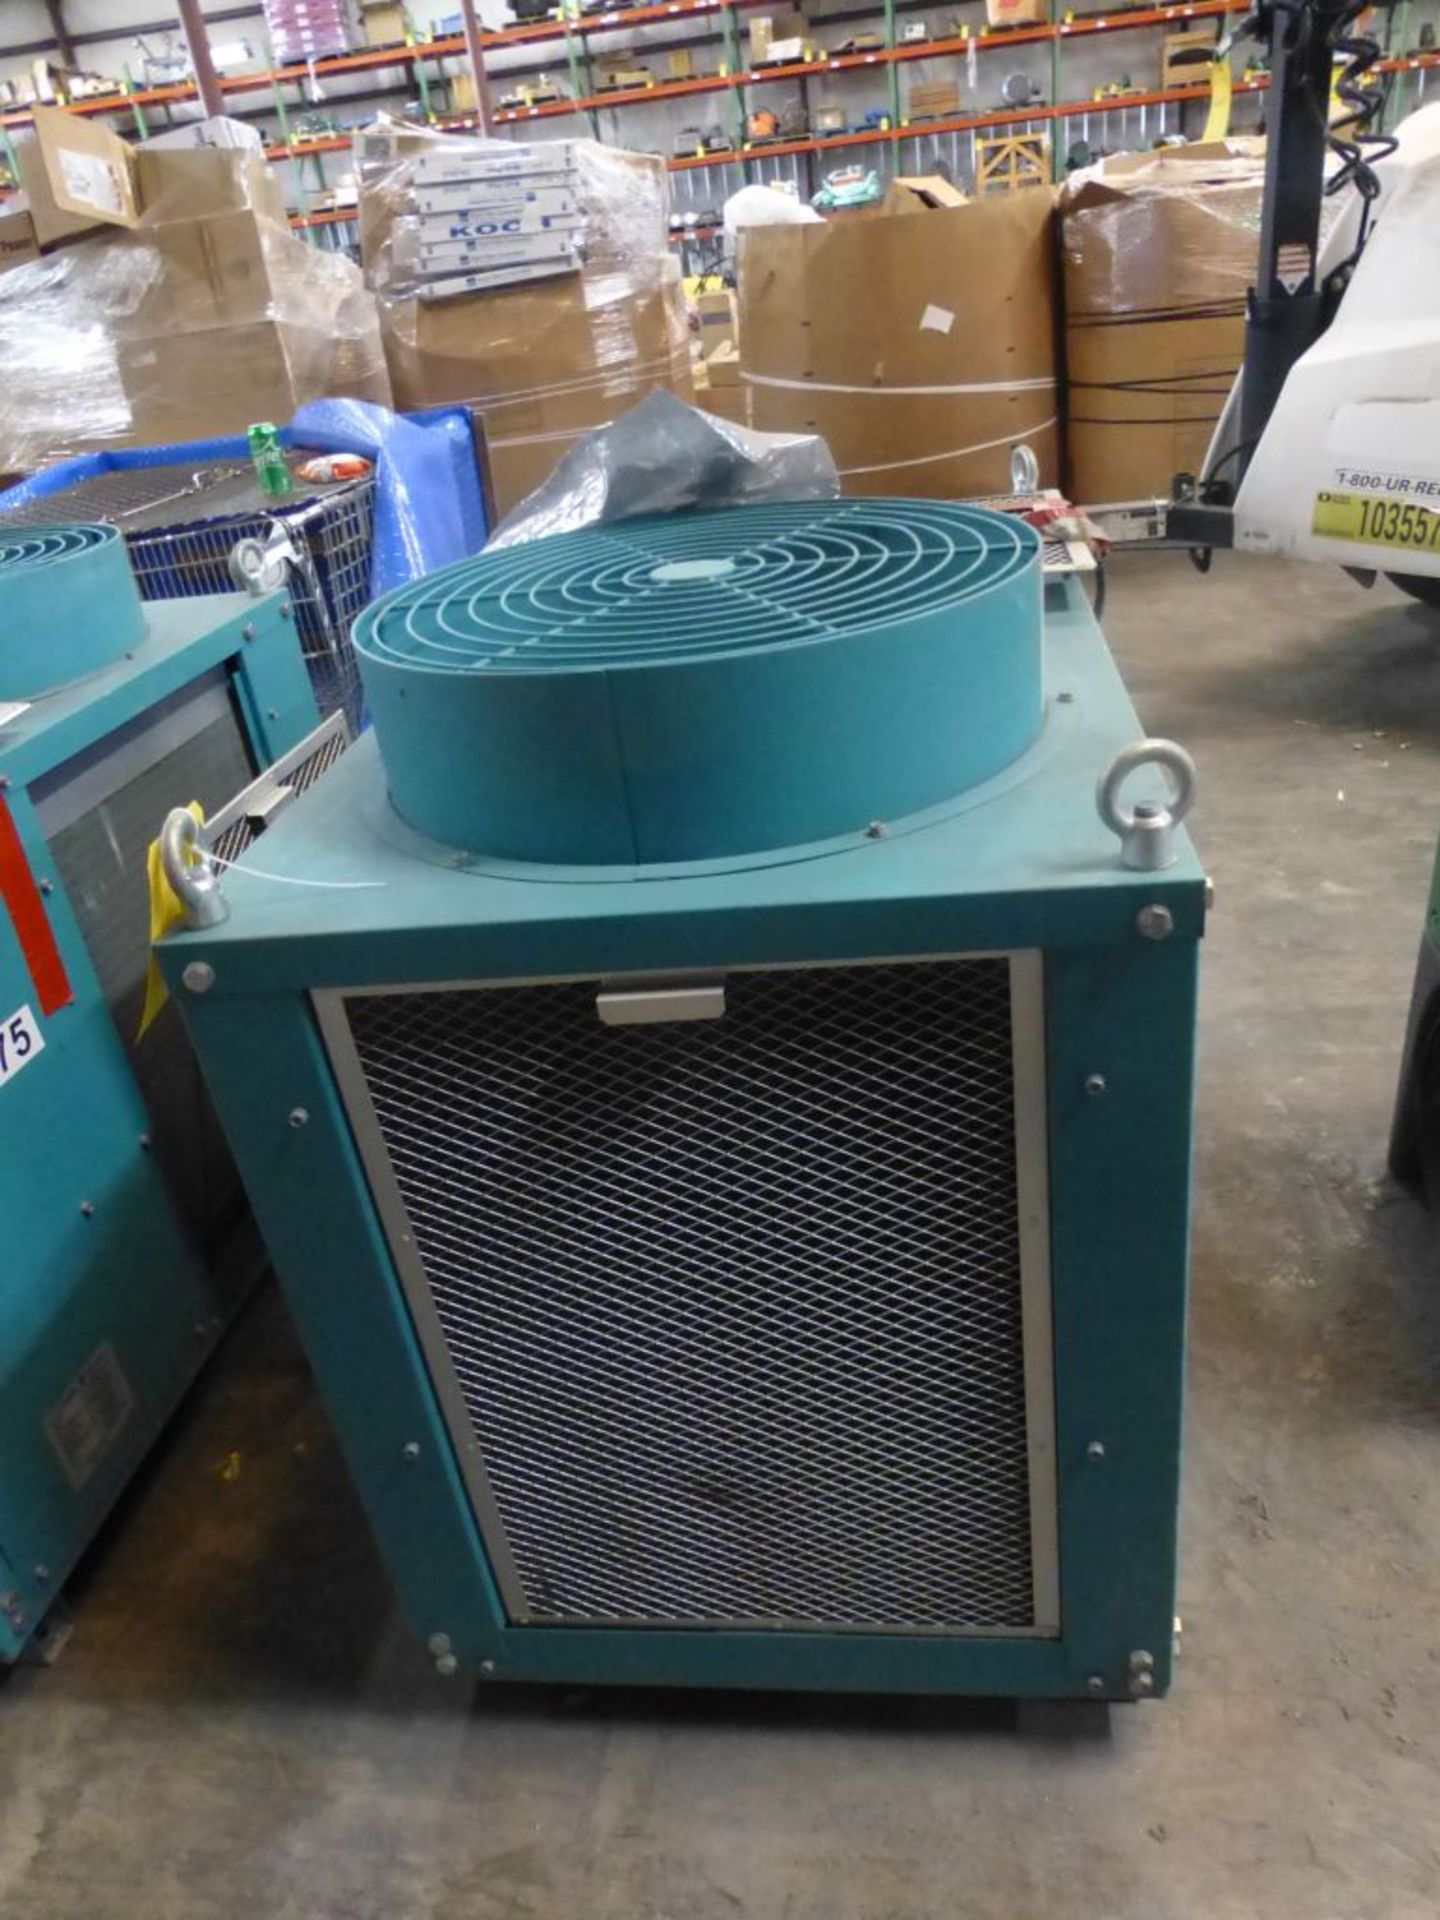 Movincool Classic 40 Air Conditioner|Model No. B29976; 220V; 3PH; Tag: 225195 - Image 4 of 6